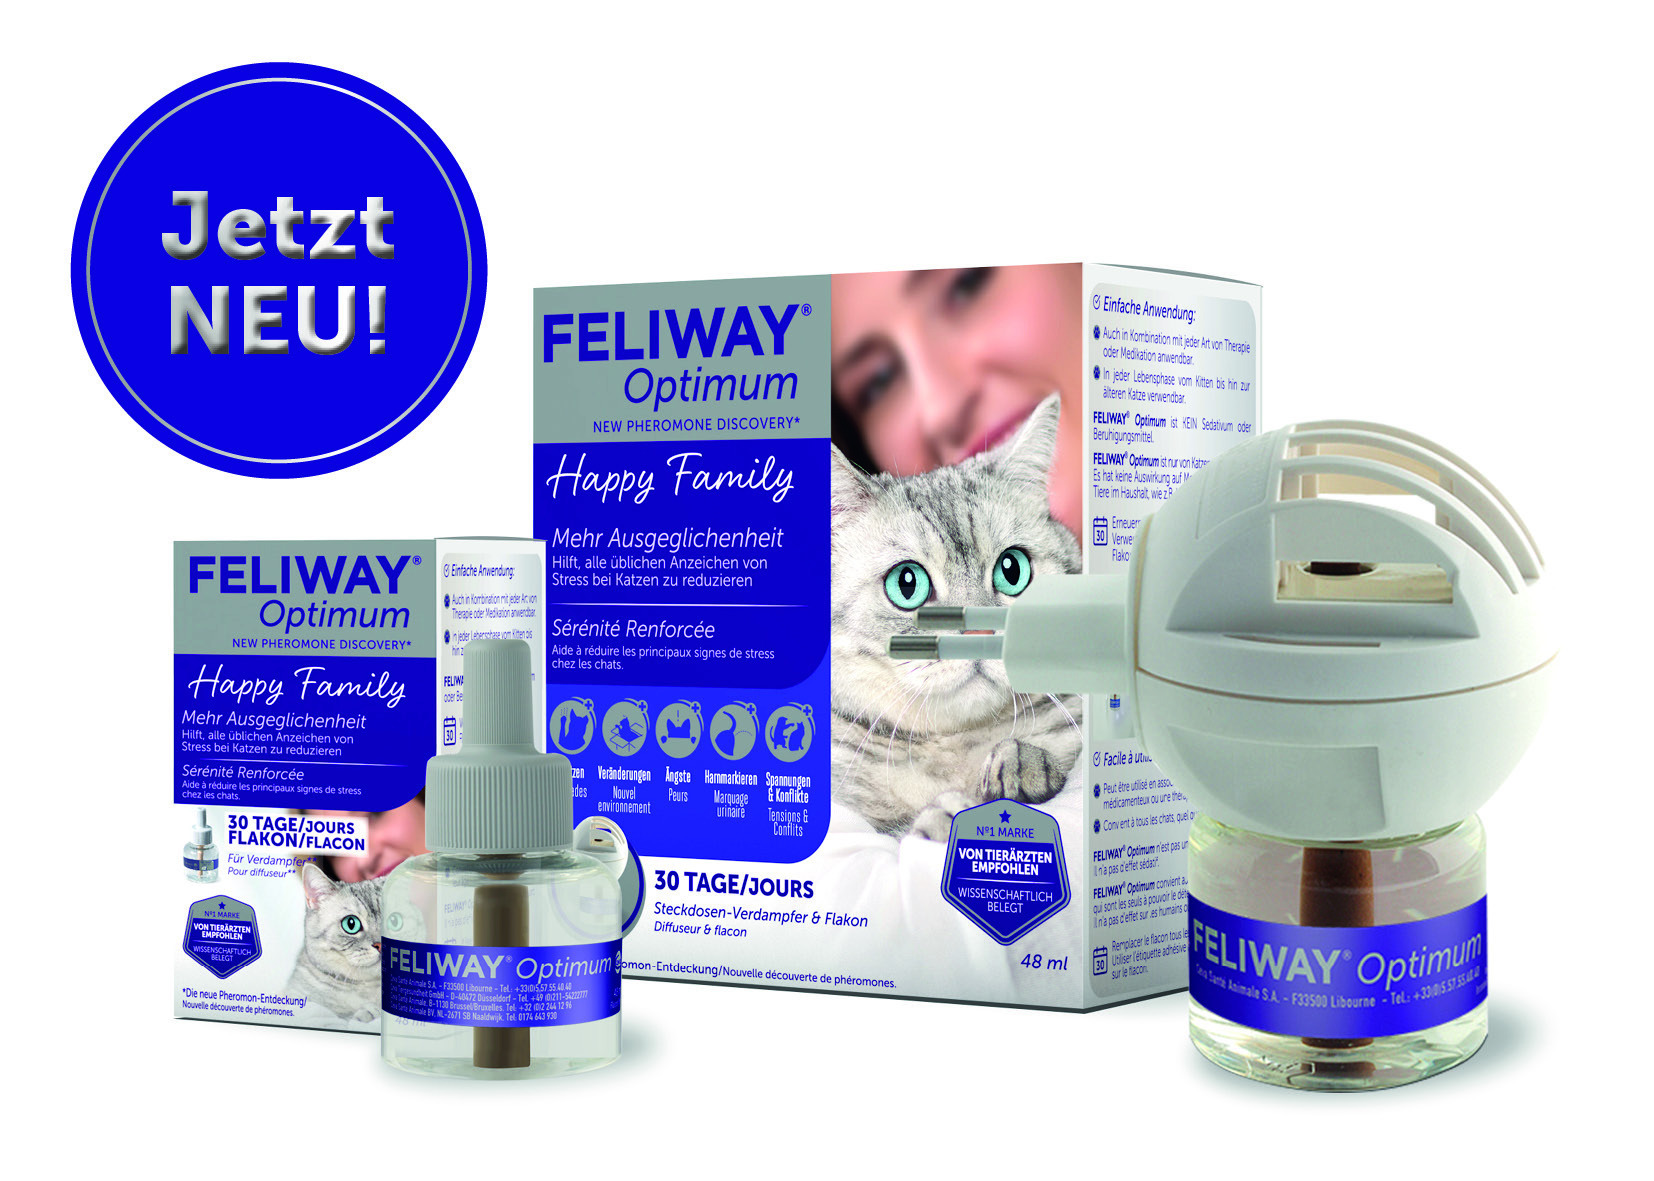 Feliway (CEVA Tiergesundheit GmbH) Le flacon de recharge FELIWAY